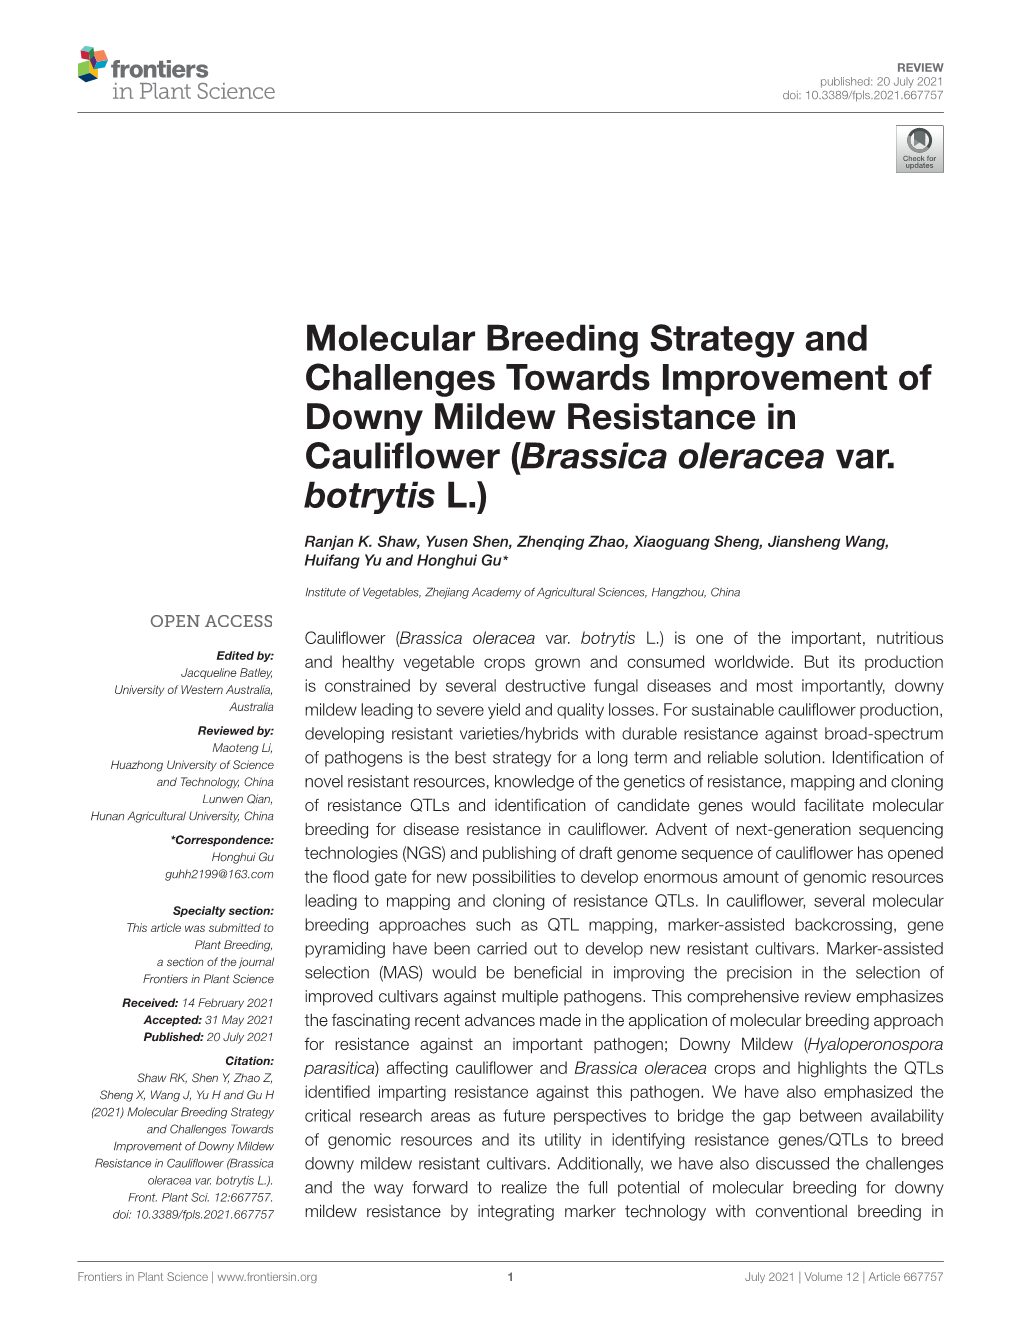 Molecular Breeding Strategy and Challenges Towards Improvement of Downy Mildew Resistance in Cauliﬂower (Brassica Oleracea Var